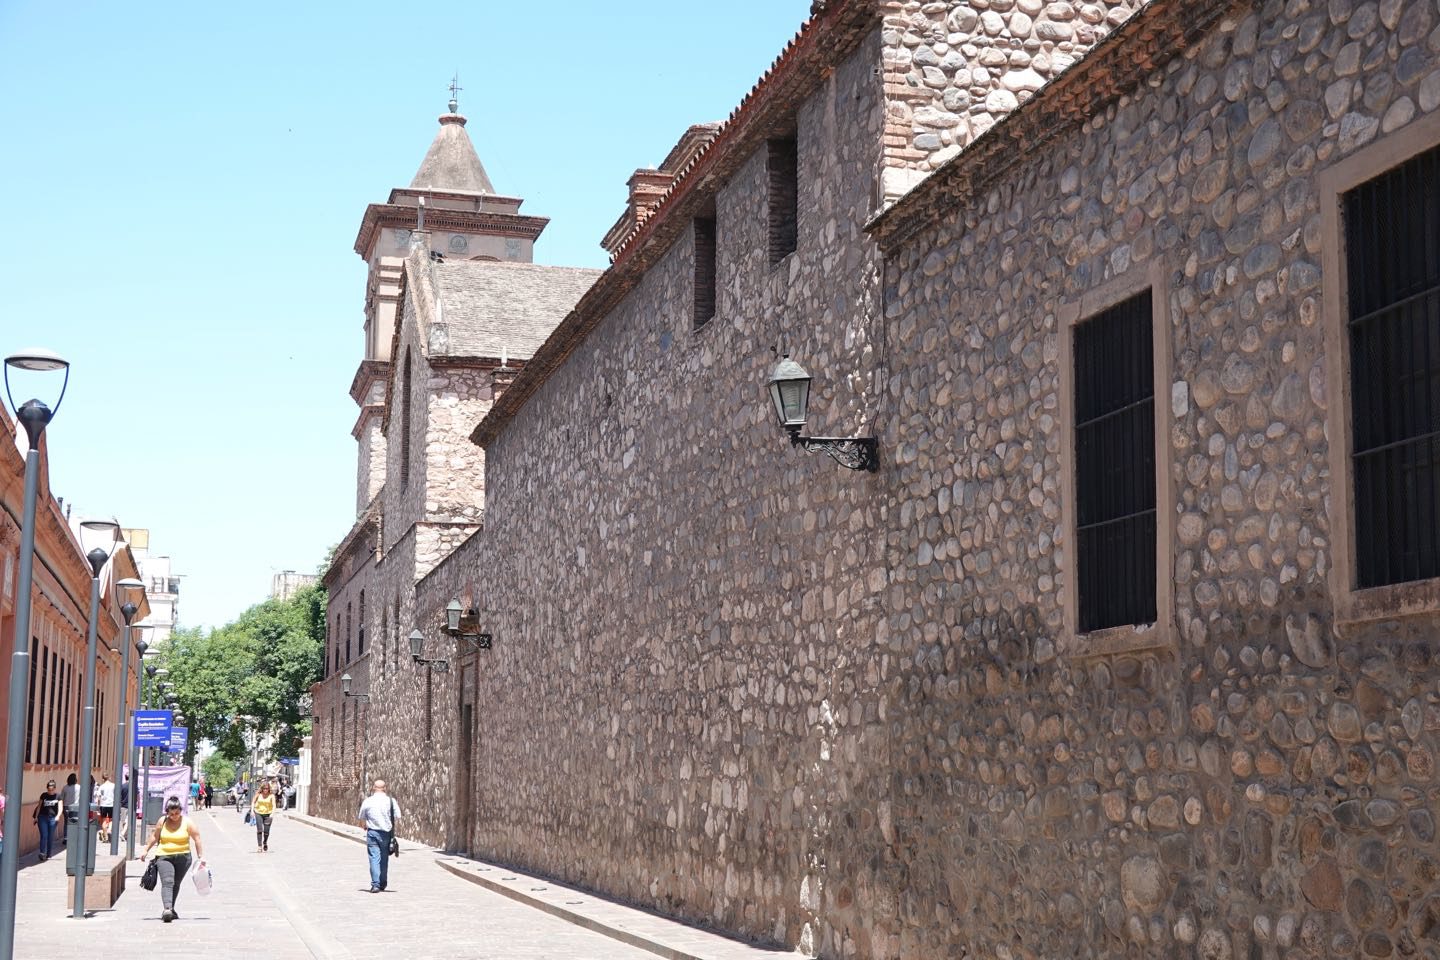 The Jesuit Block. One of the UNESCO World Heritage Sites of Argentina